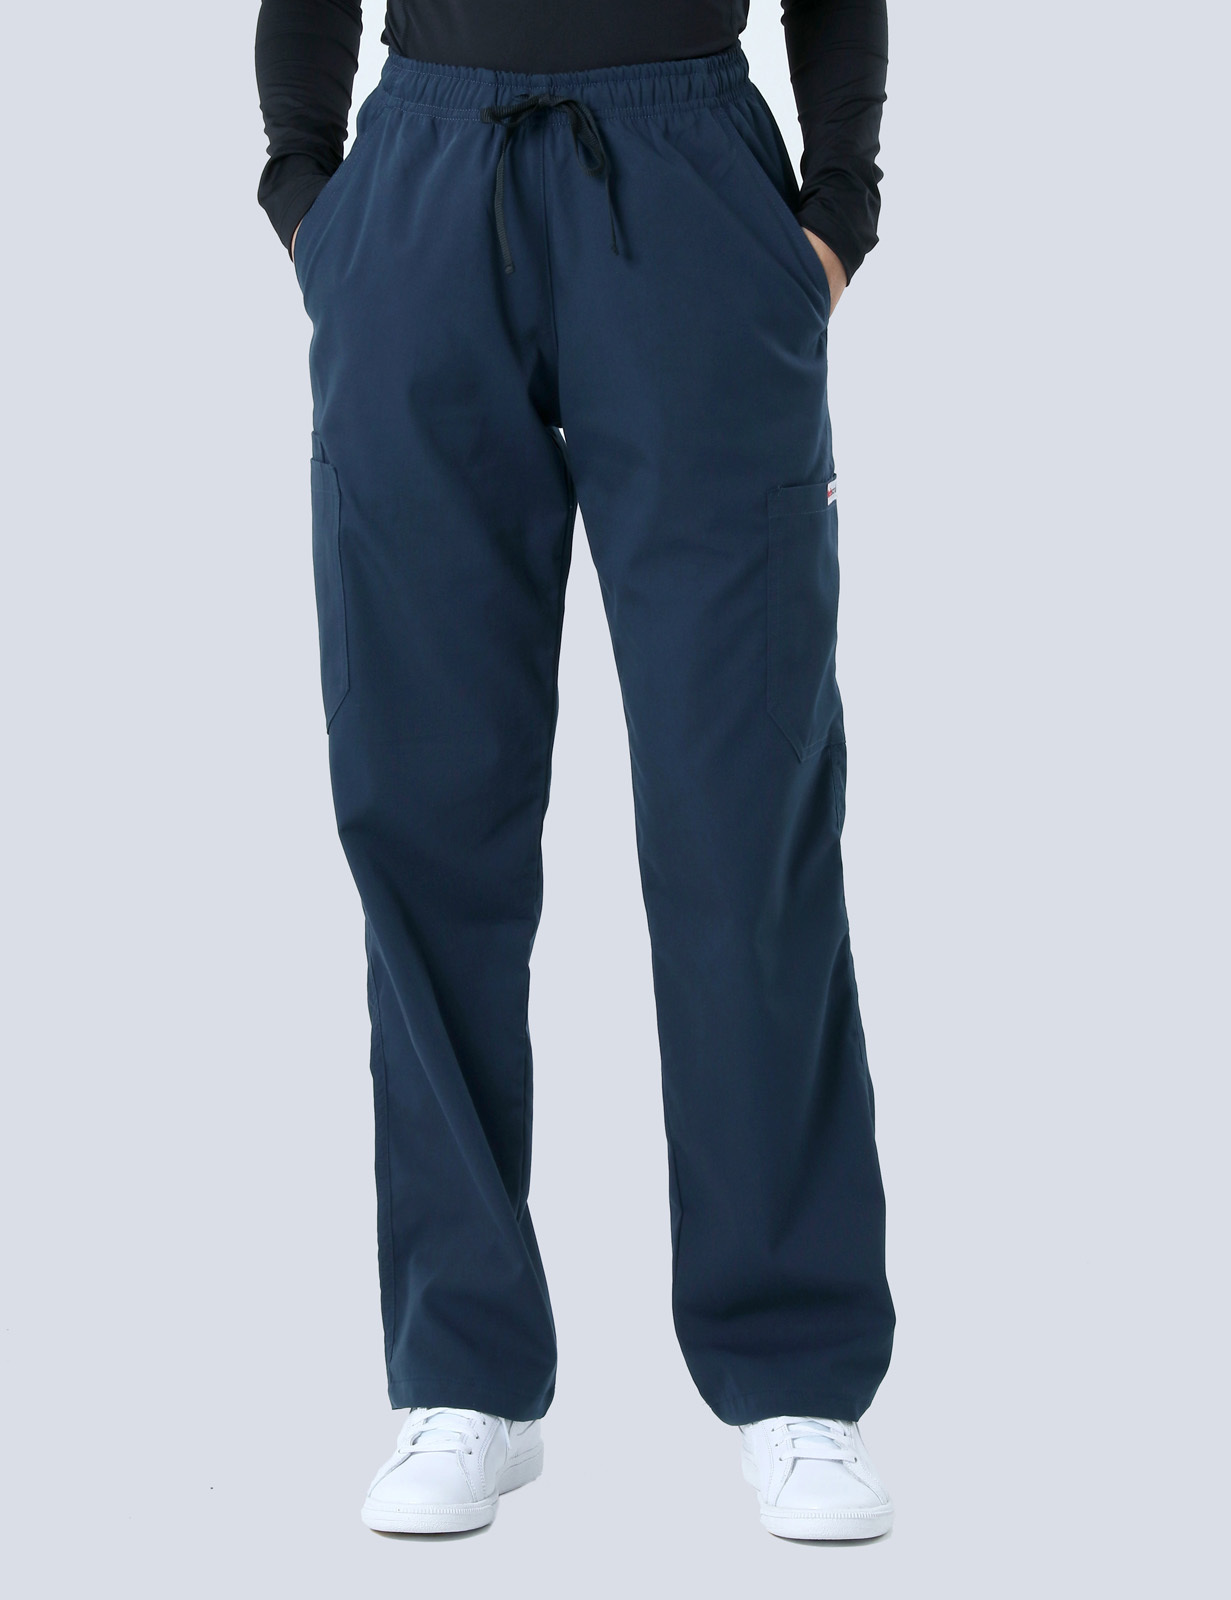 Women's Cargo Performance Pants - Navy - Medium